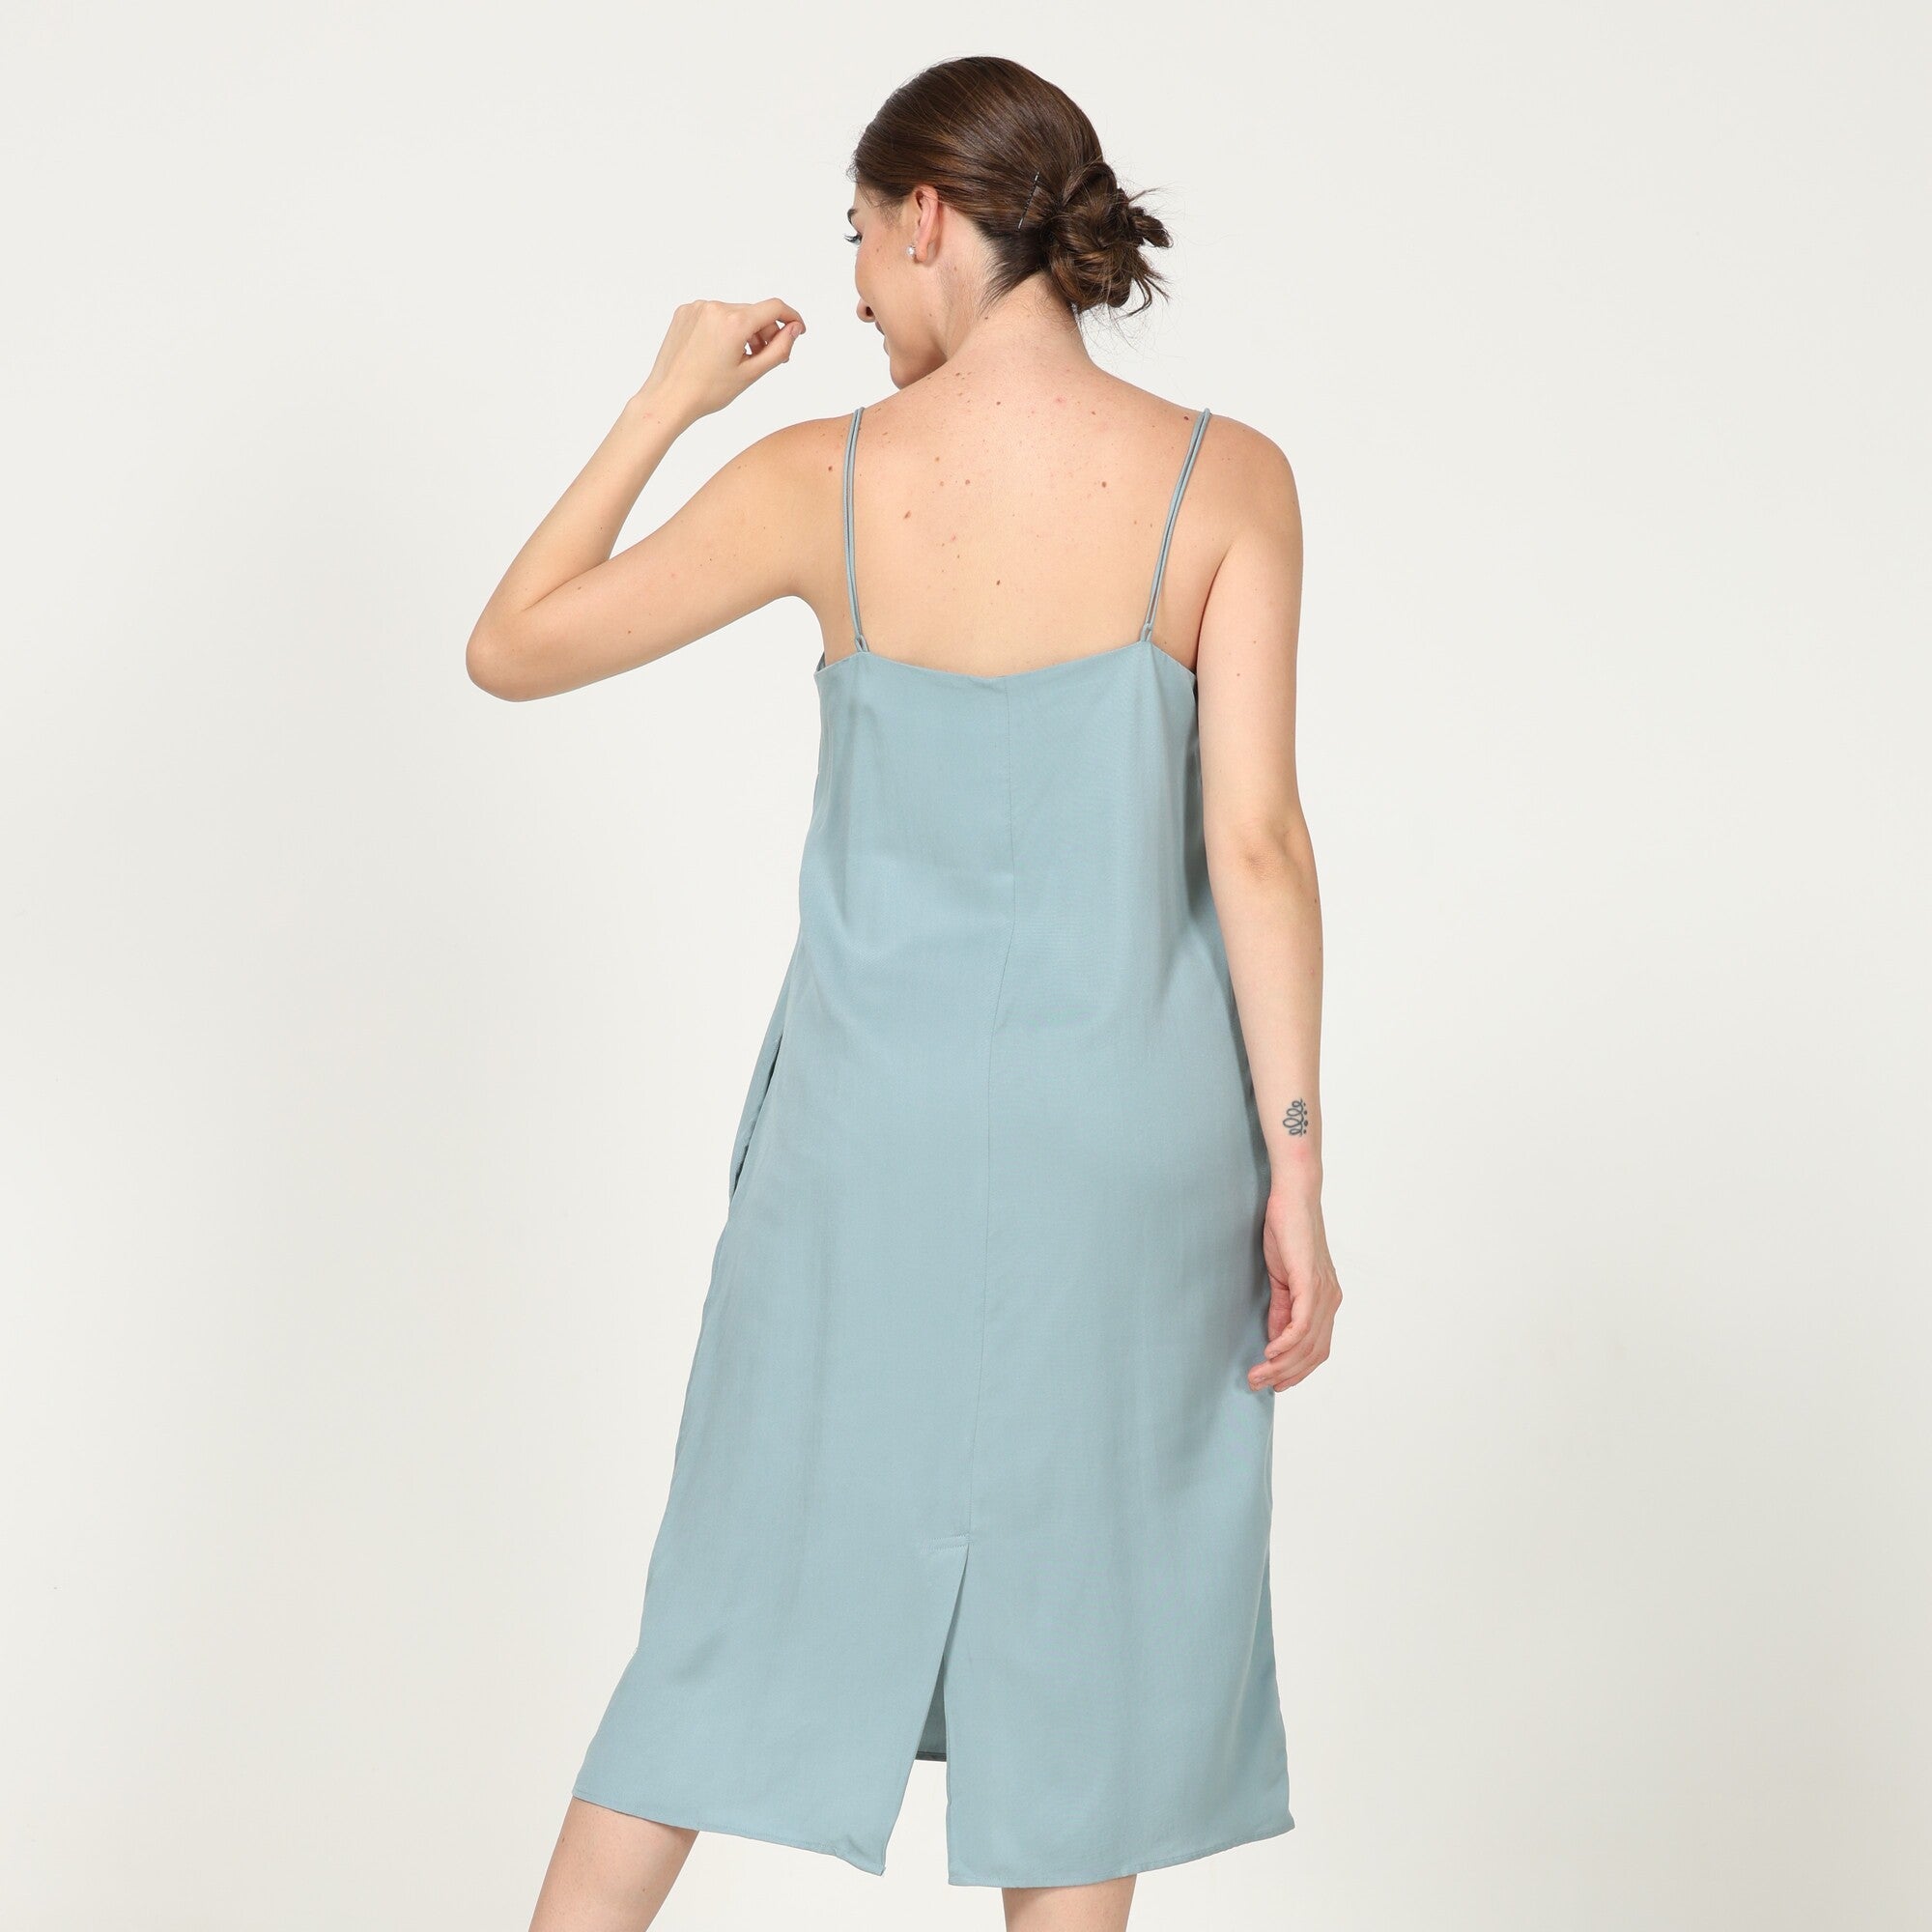 Slip Dress - Pastel Blue